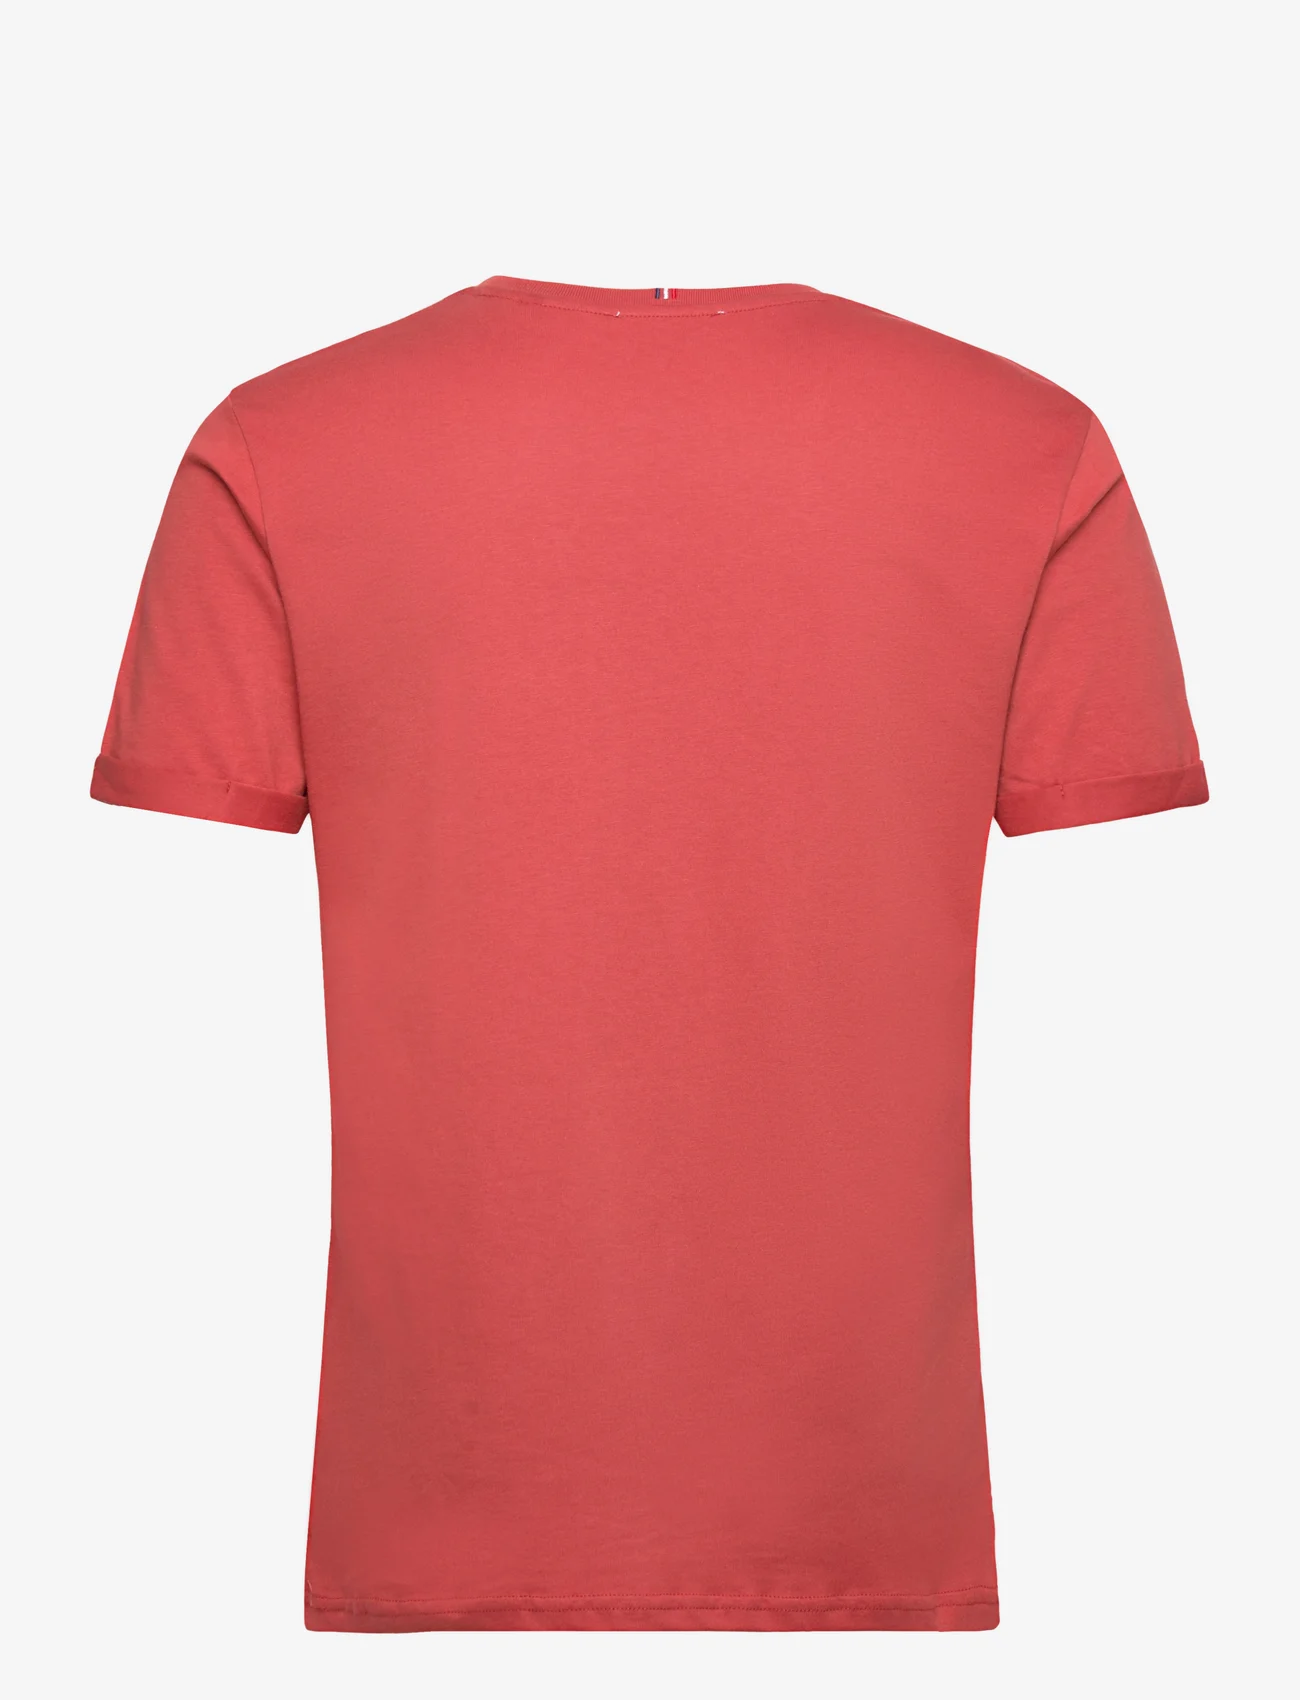 Les Deux - Nørregaard T-Shirt - Seasonal - zemākās cenas - rust red/orange - 1